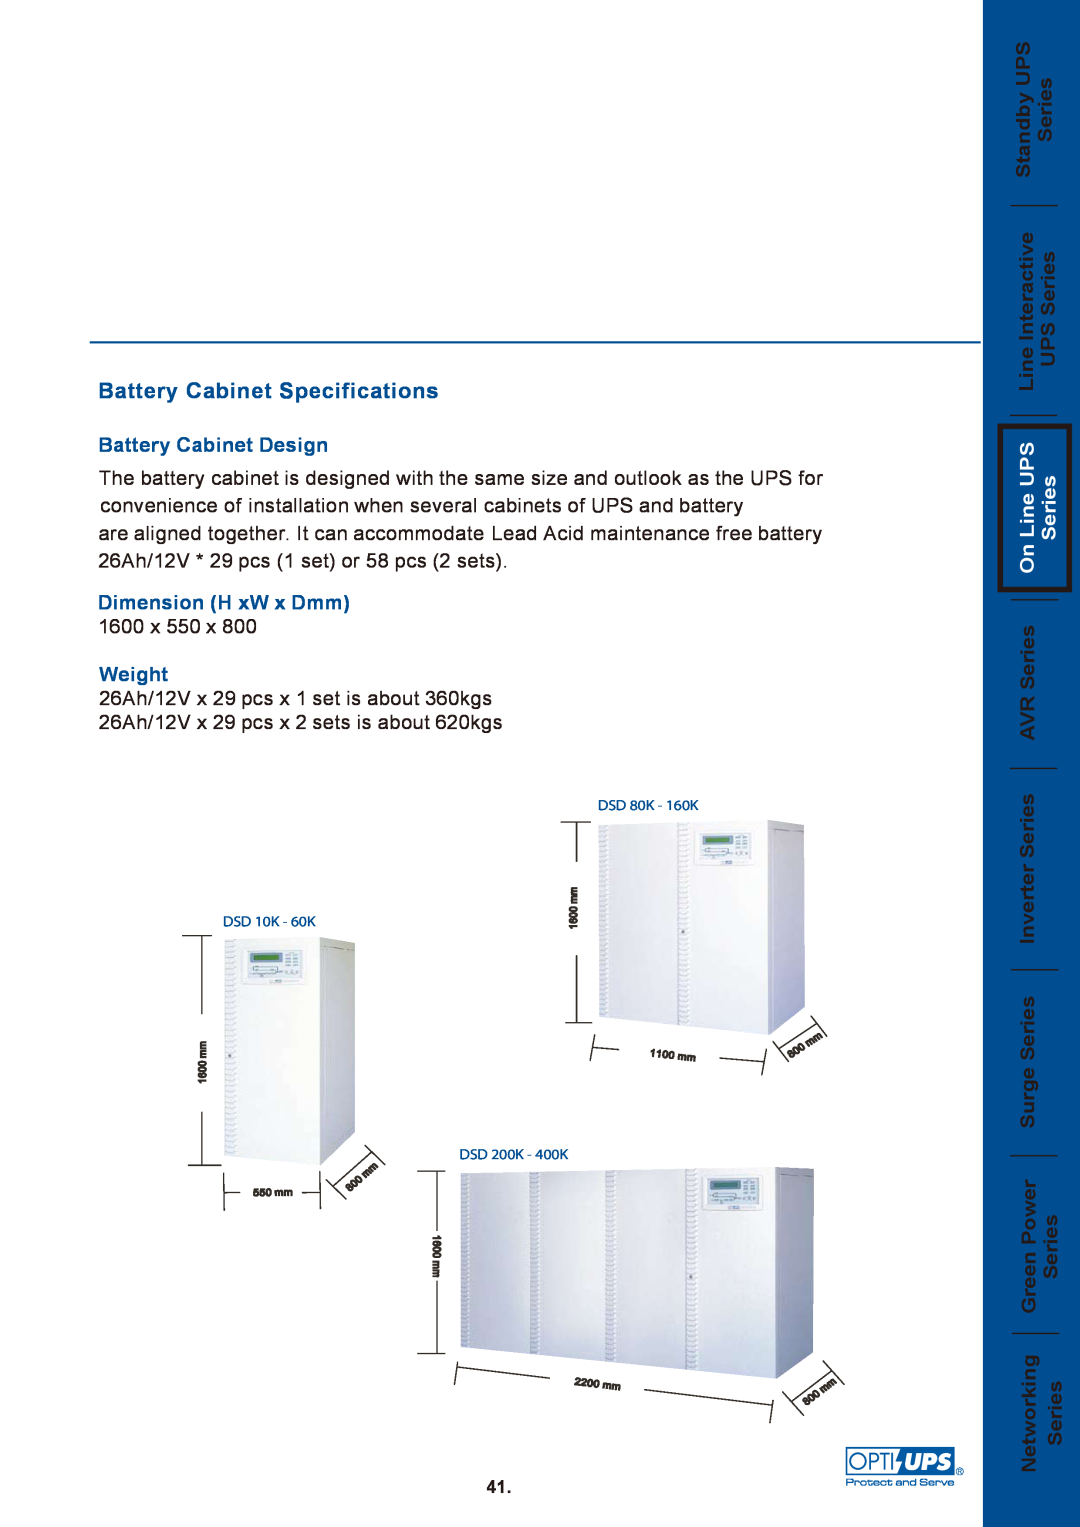 OPTI-UPS DSD31 / DSD33 Battery Cabinet Specifications, UPS Series Series, Line UPS Series, Battery Cabinet Design, Weight 